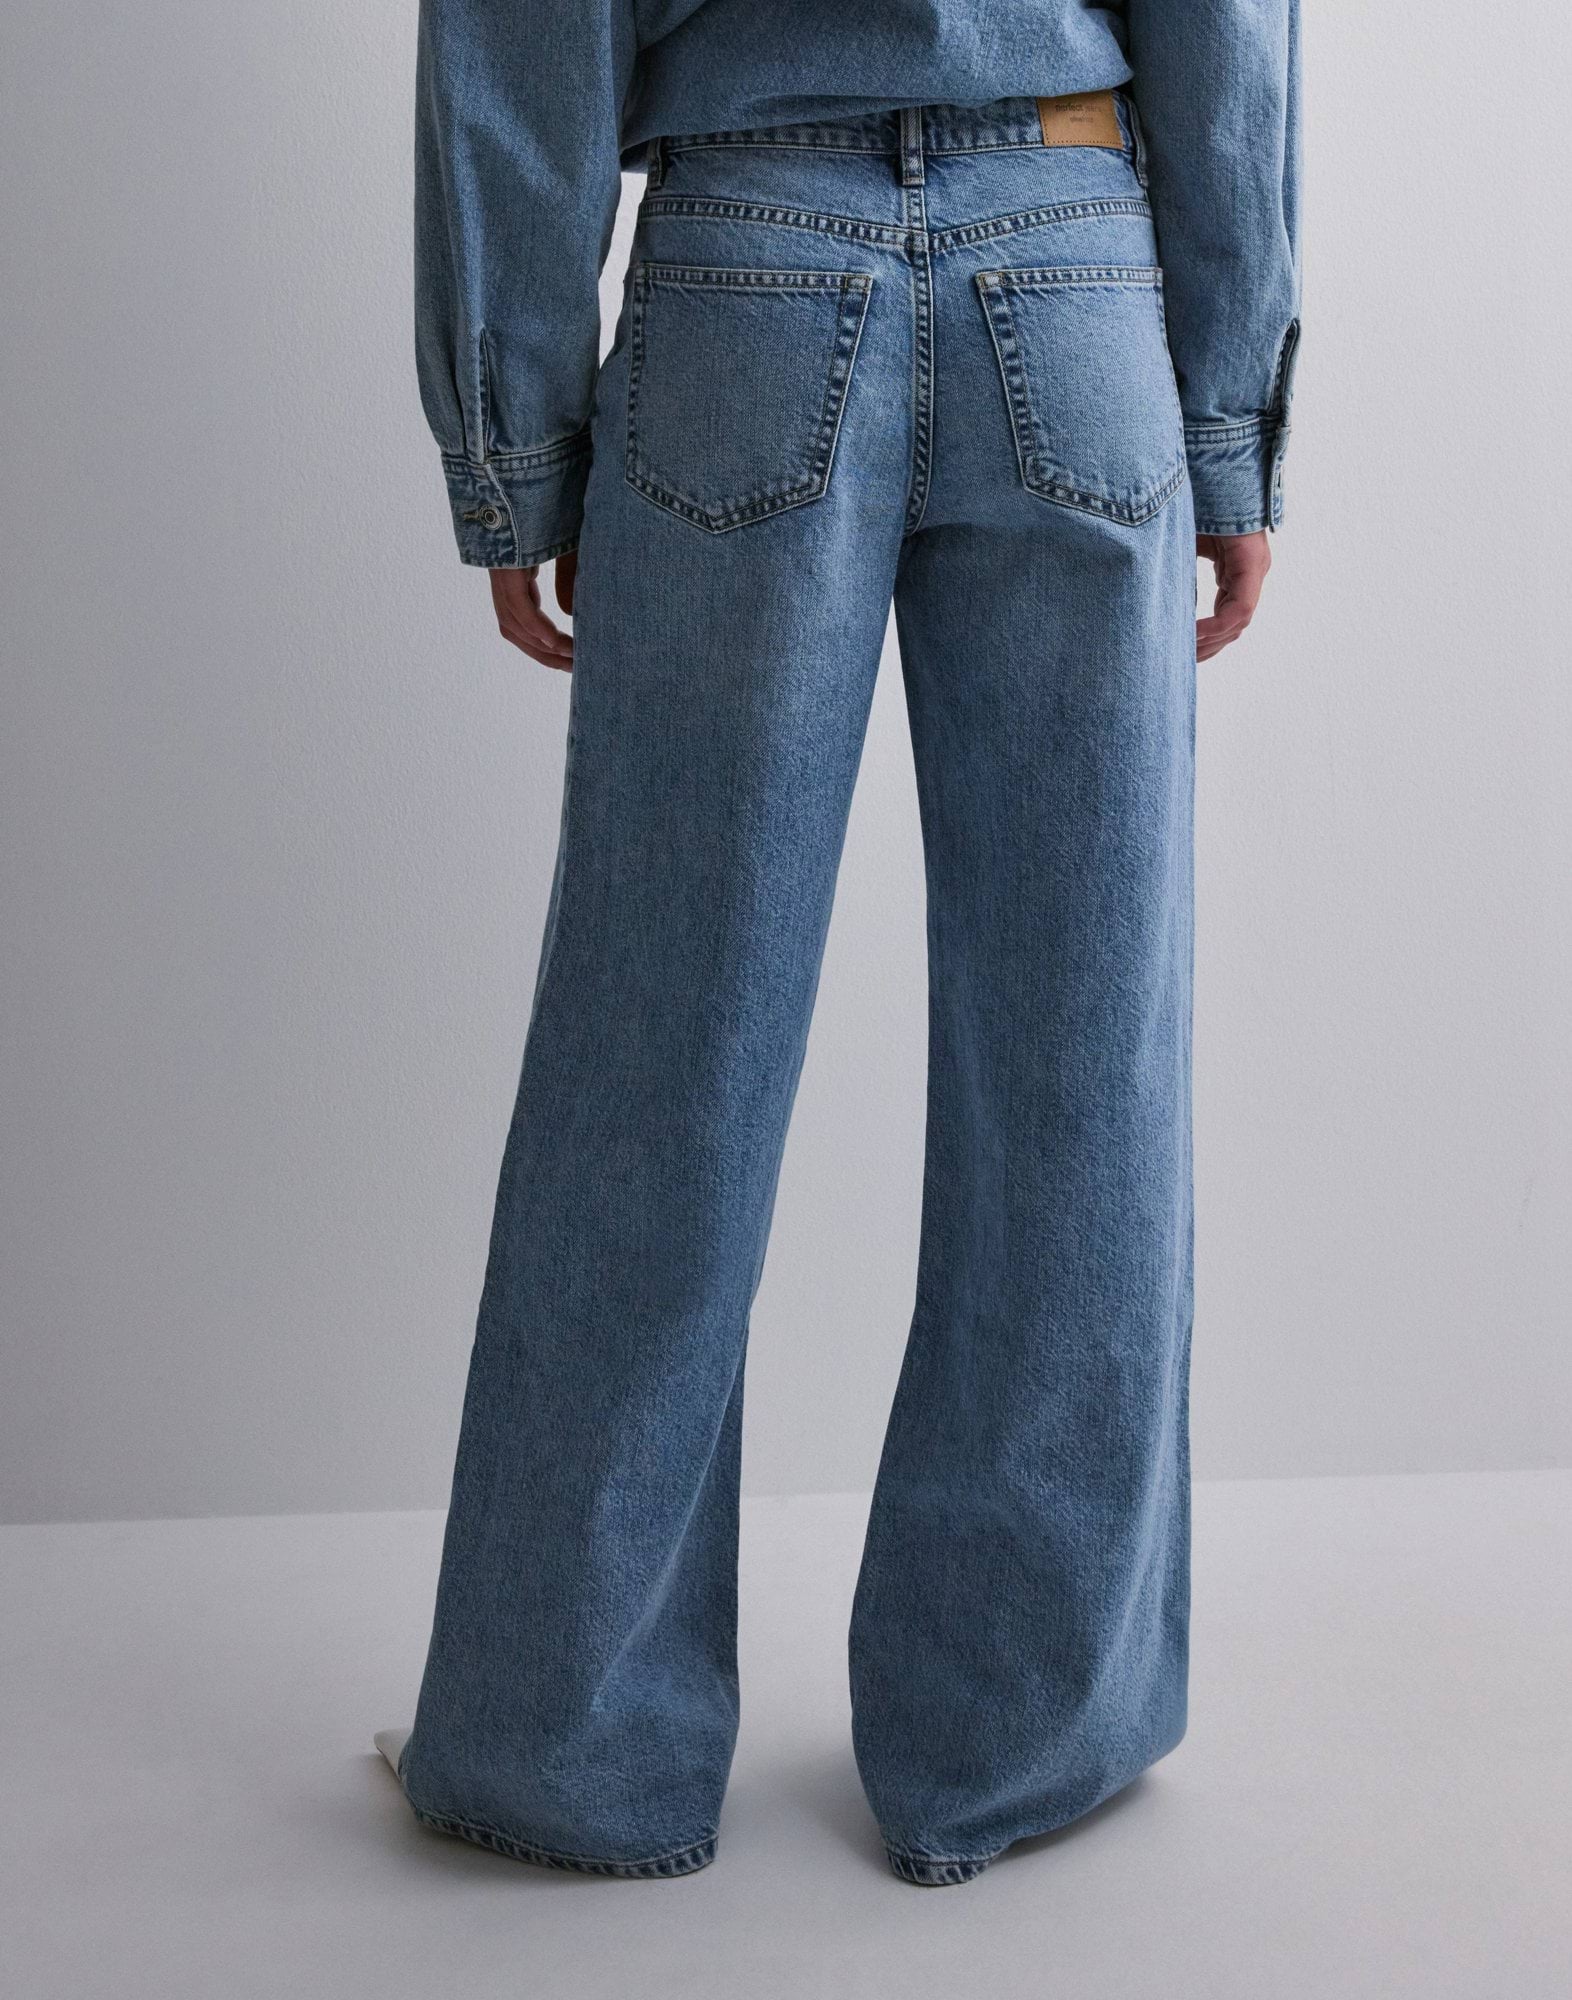 Super wide jeans